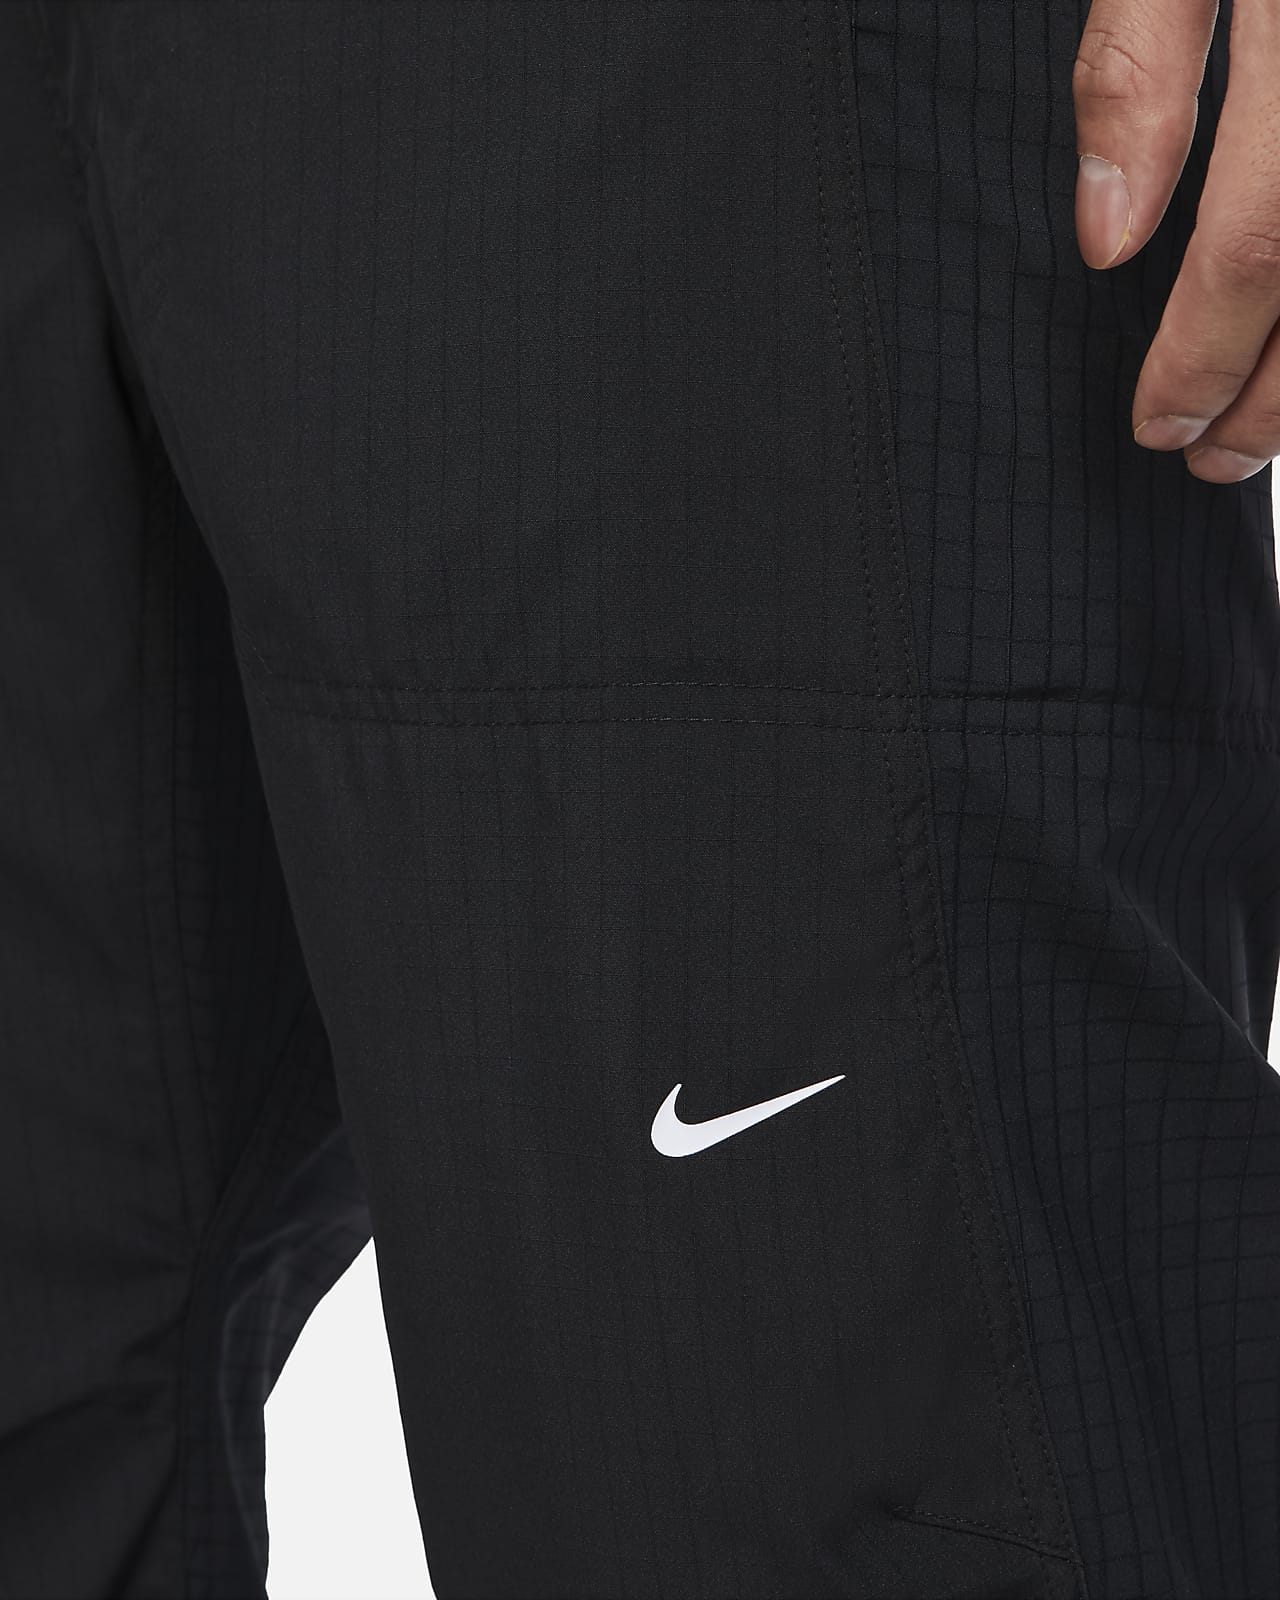 Lycra Nike Dri Fit Track Pants Solid